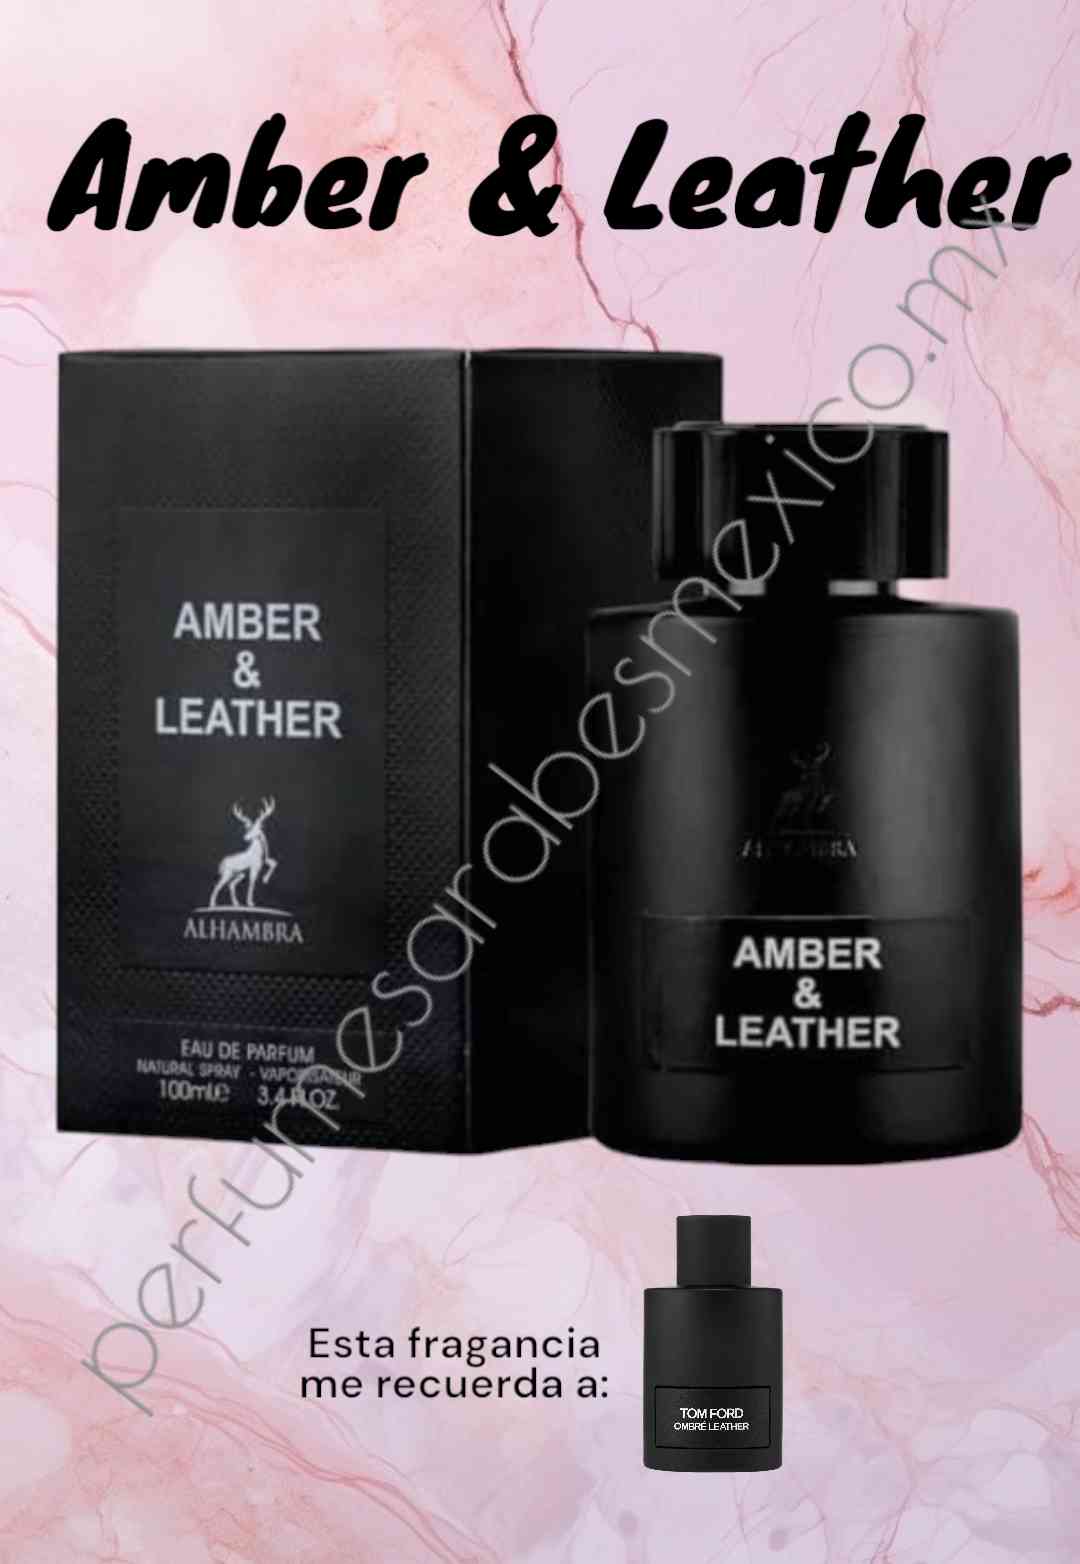 Amber & Leather de Maison Alhambra